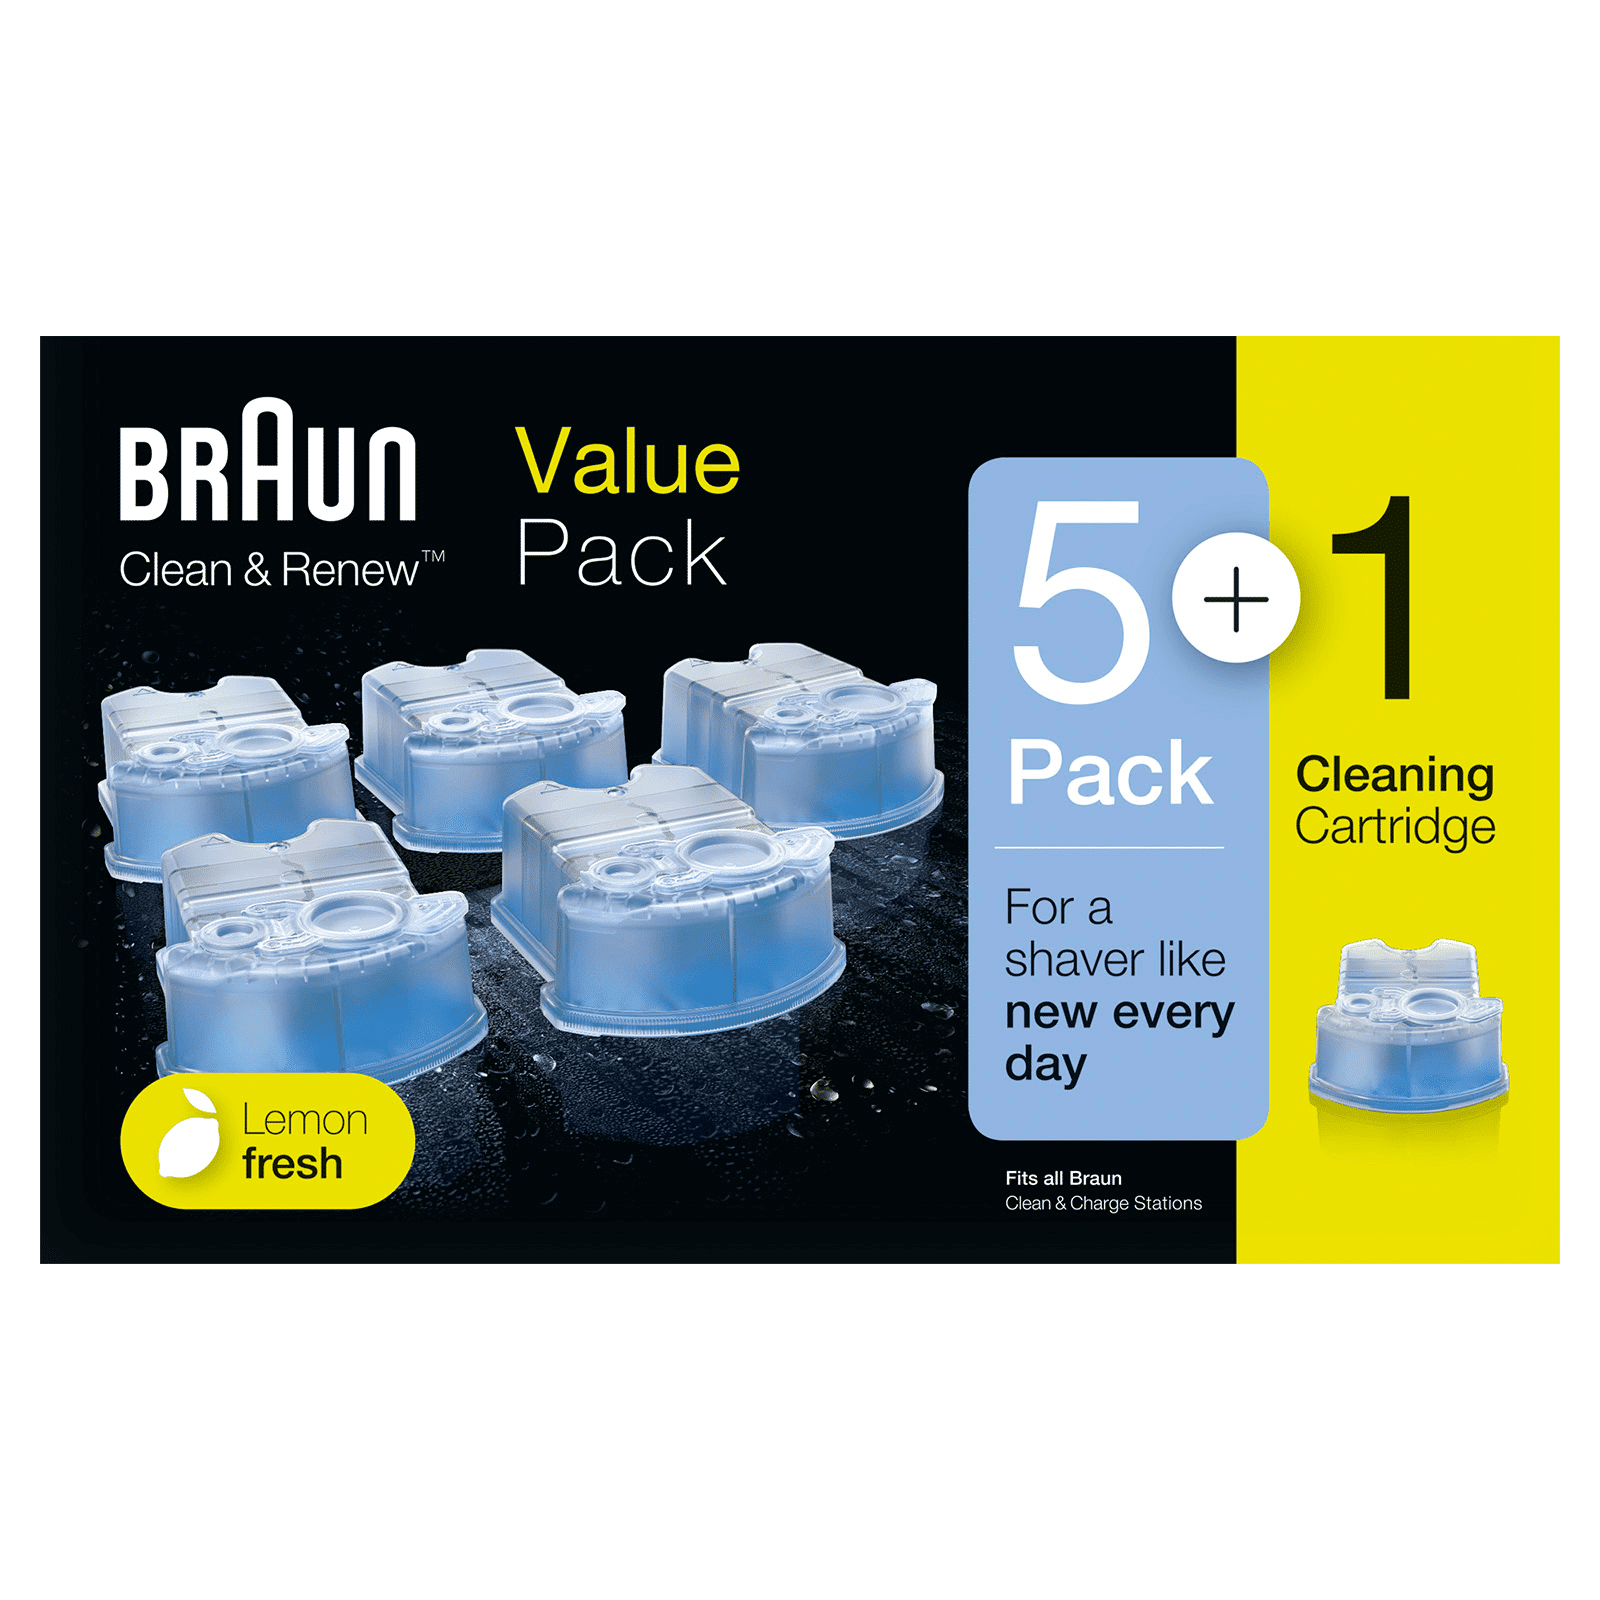 Braun Cleaning Cartridge 5+1